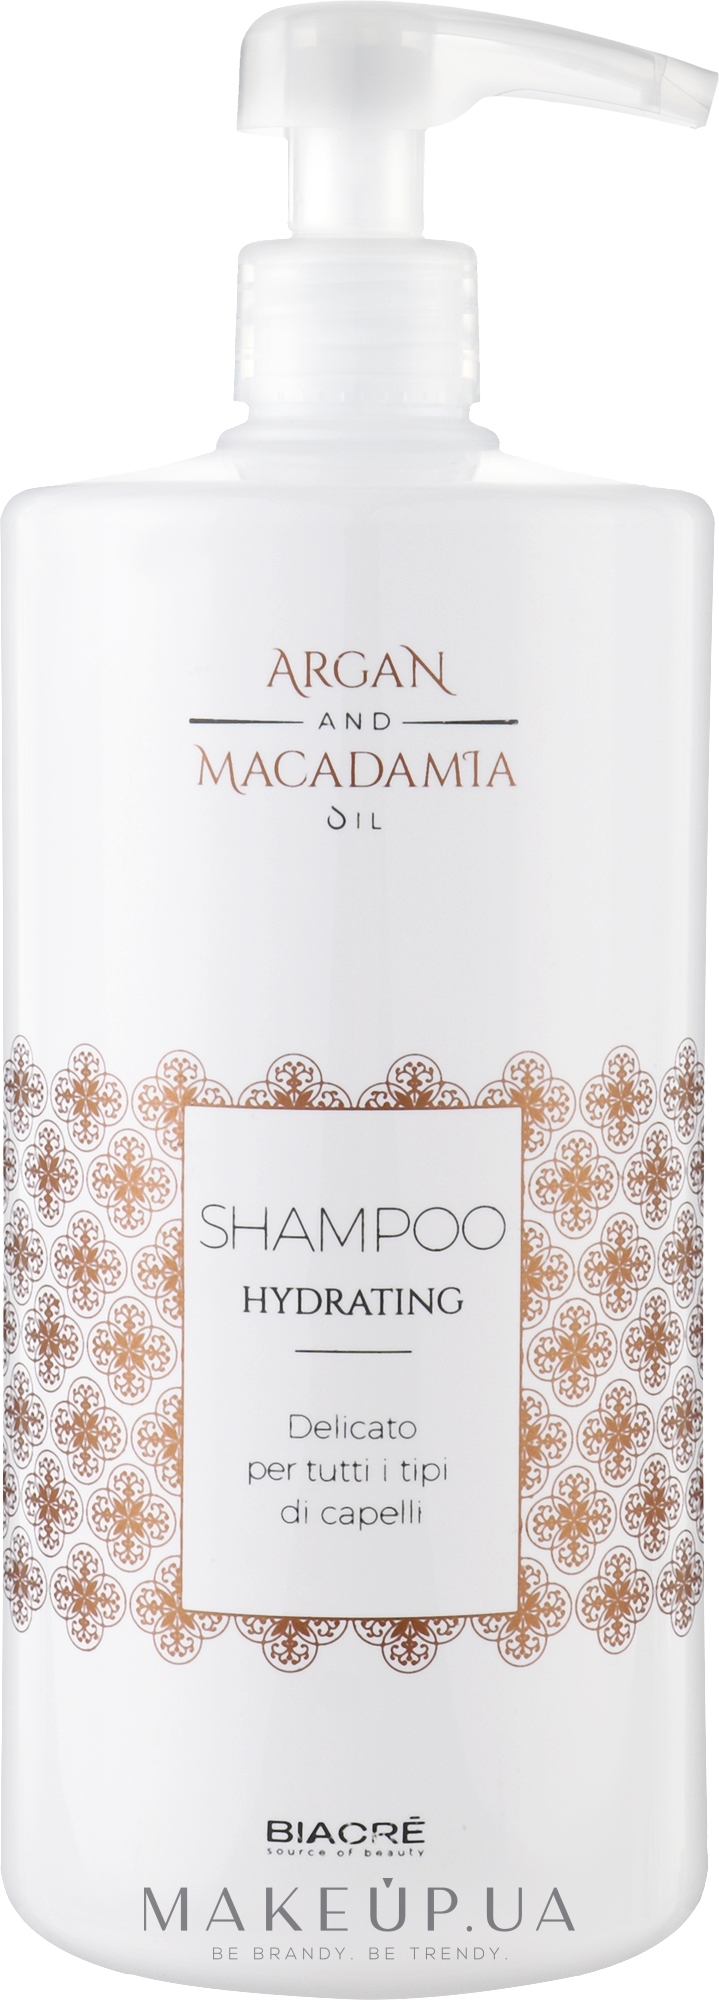 Увлажняющий шампунь «Арган и Макадамия» - Biacre Argan and Macadamia Shampoo Hydrating  — фото 1000ml